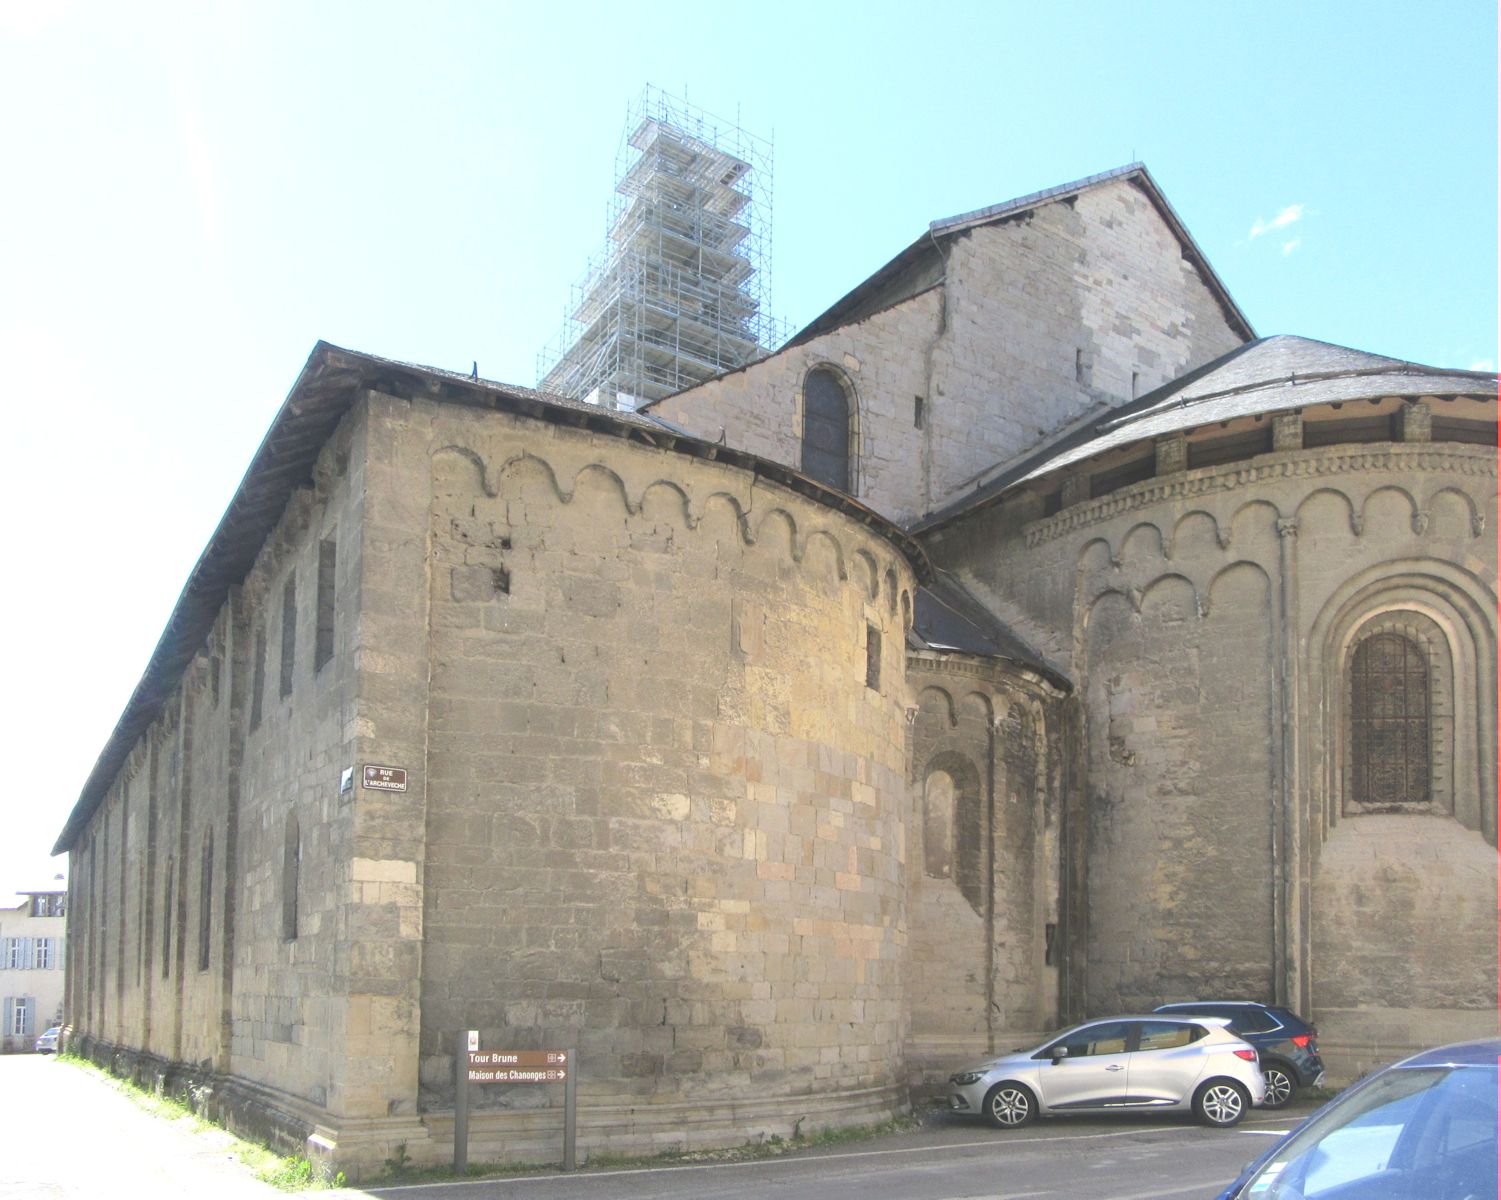 heutige Kathedrale in Embrun, erbaut ab 1170